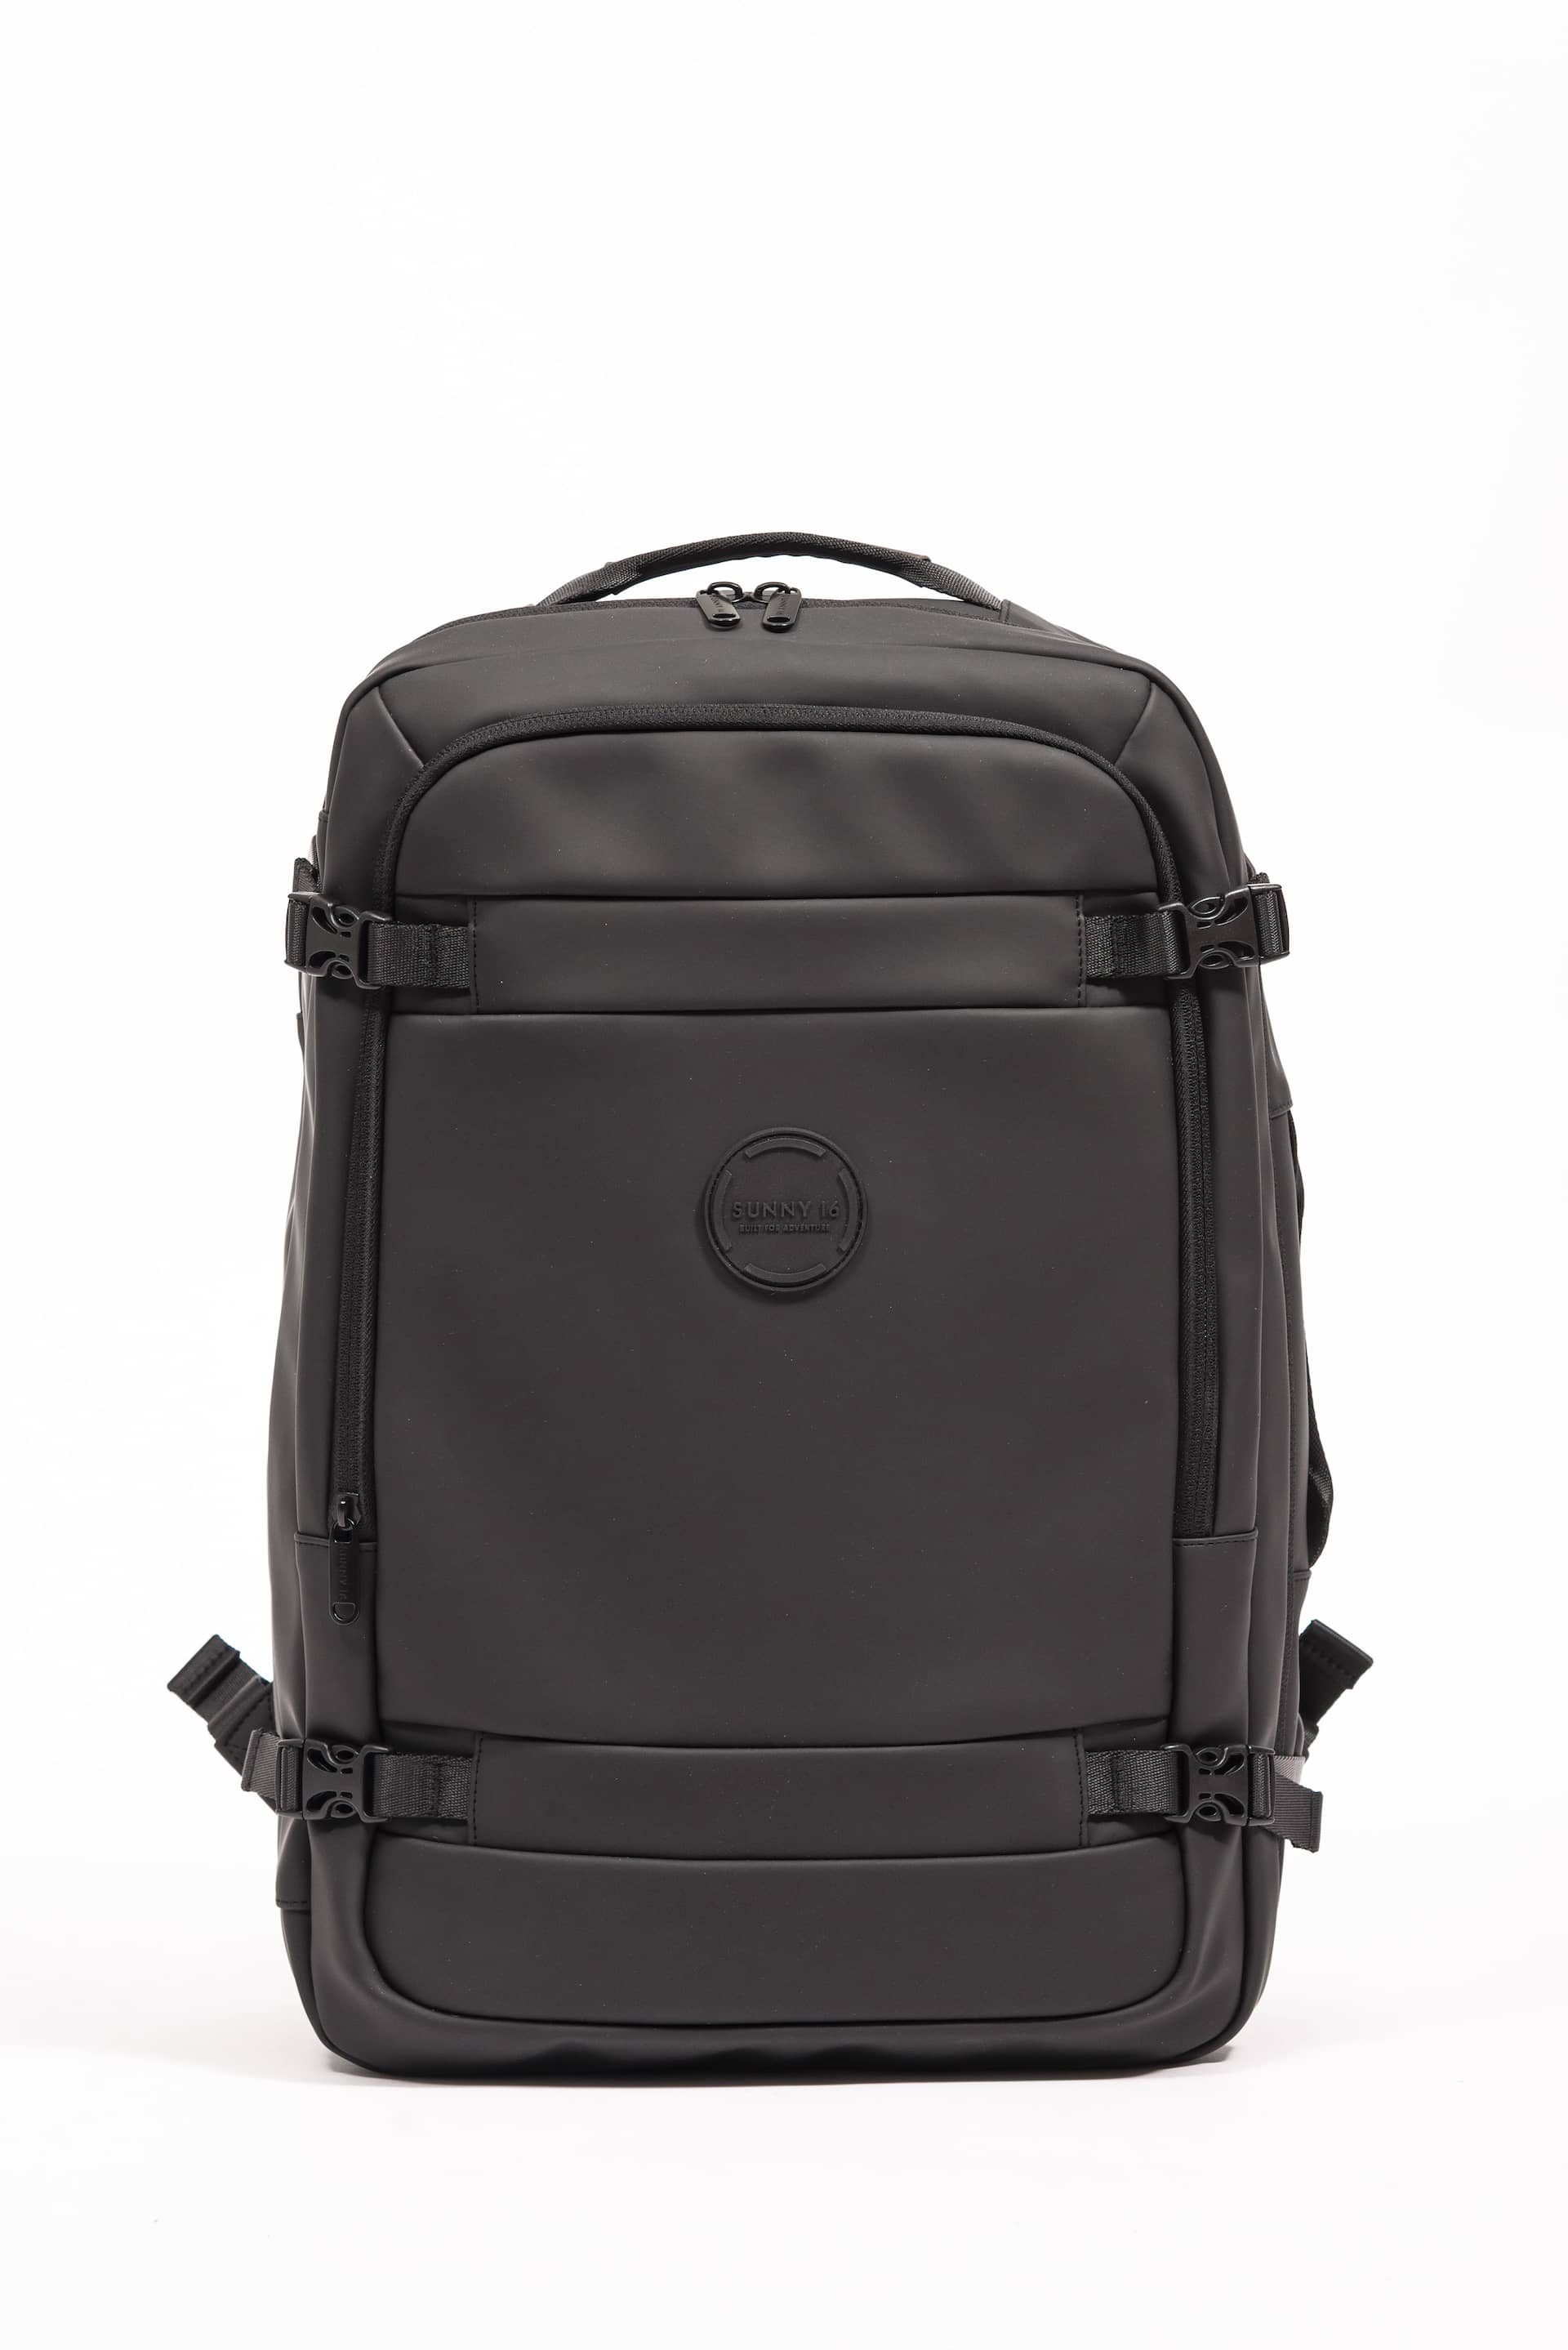 Best Lightweight Travel Laptop Backpack for International Travels - Sunny 16